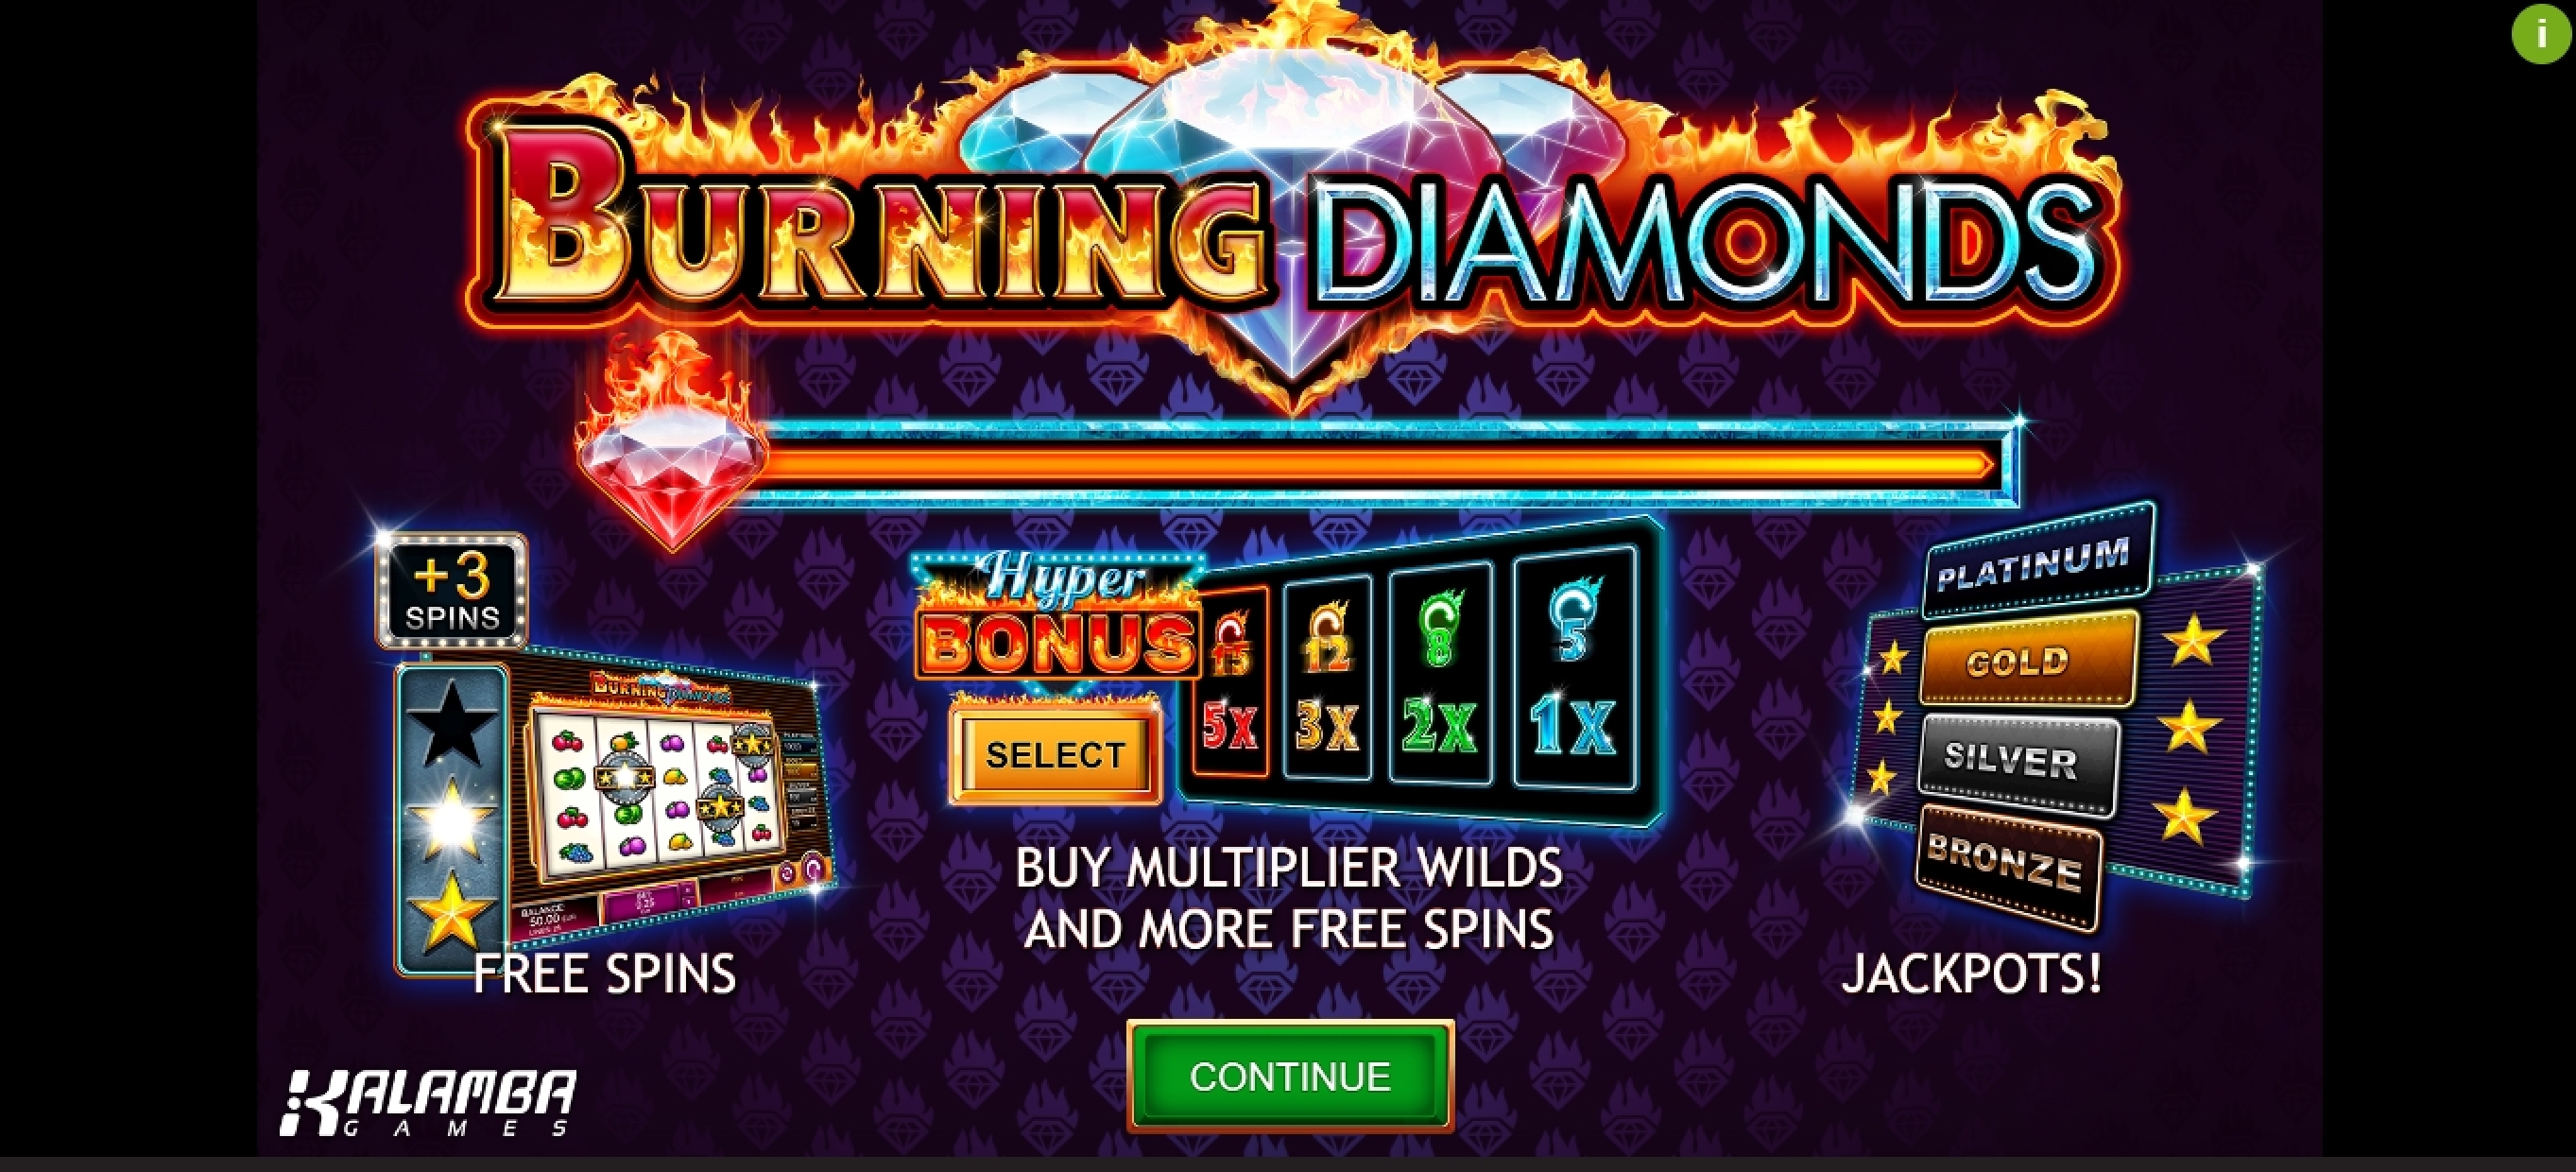 Play Burning Diamonds Free Casino Slot Game by Kalamba Games